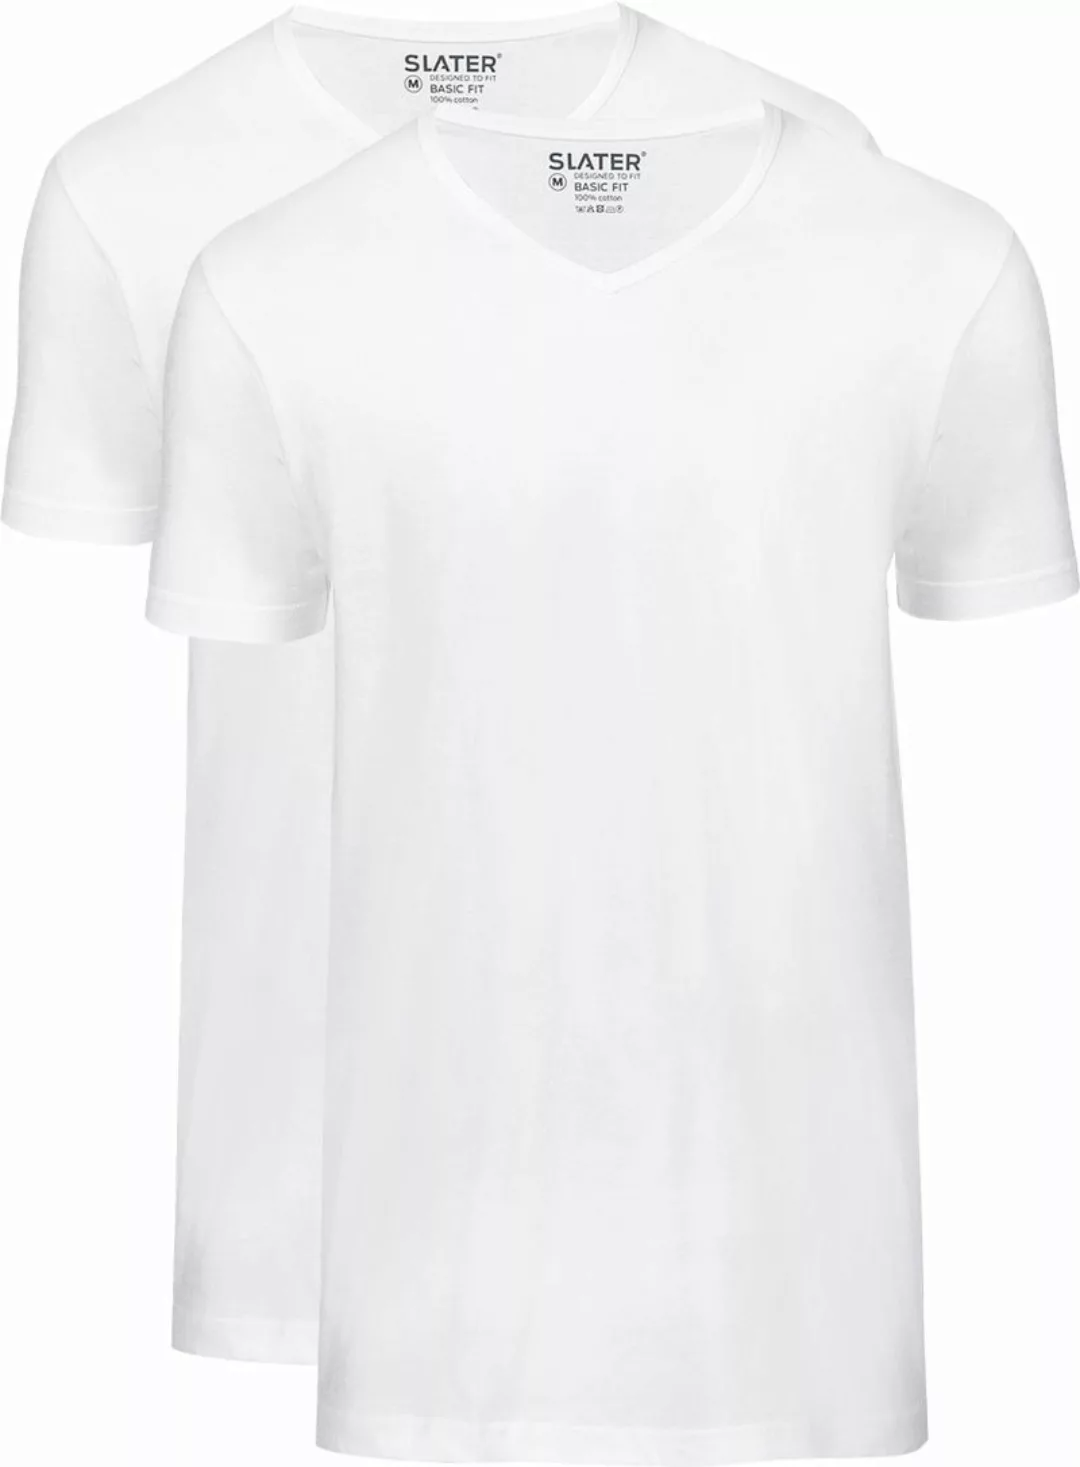 Slater 2er-Pack Basic Fit T-shirt V-Ausschnitt Weiß - Größe XXL günstig online kaufen